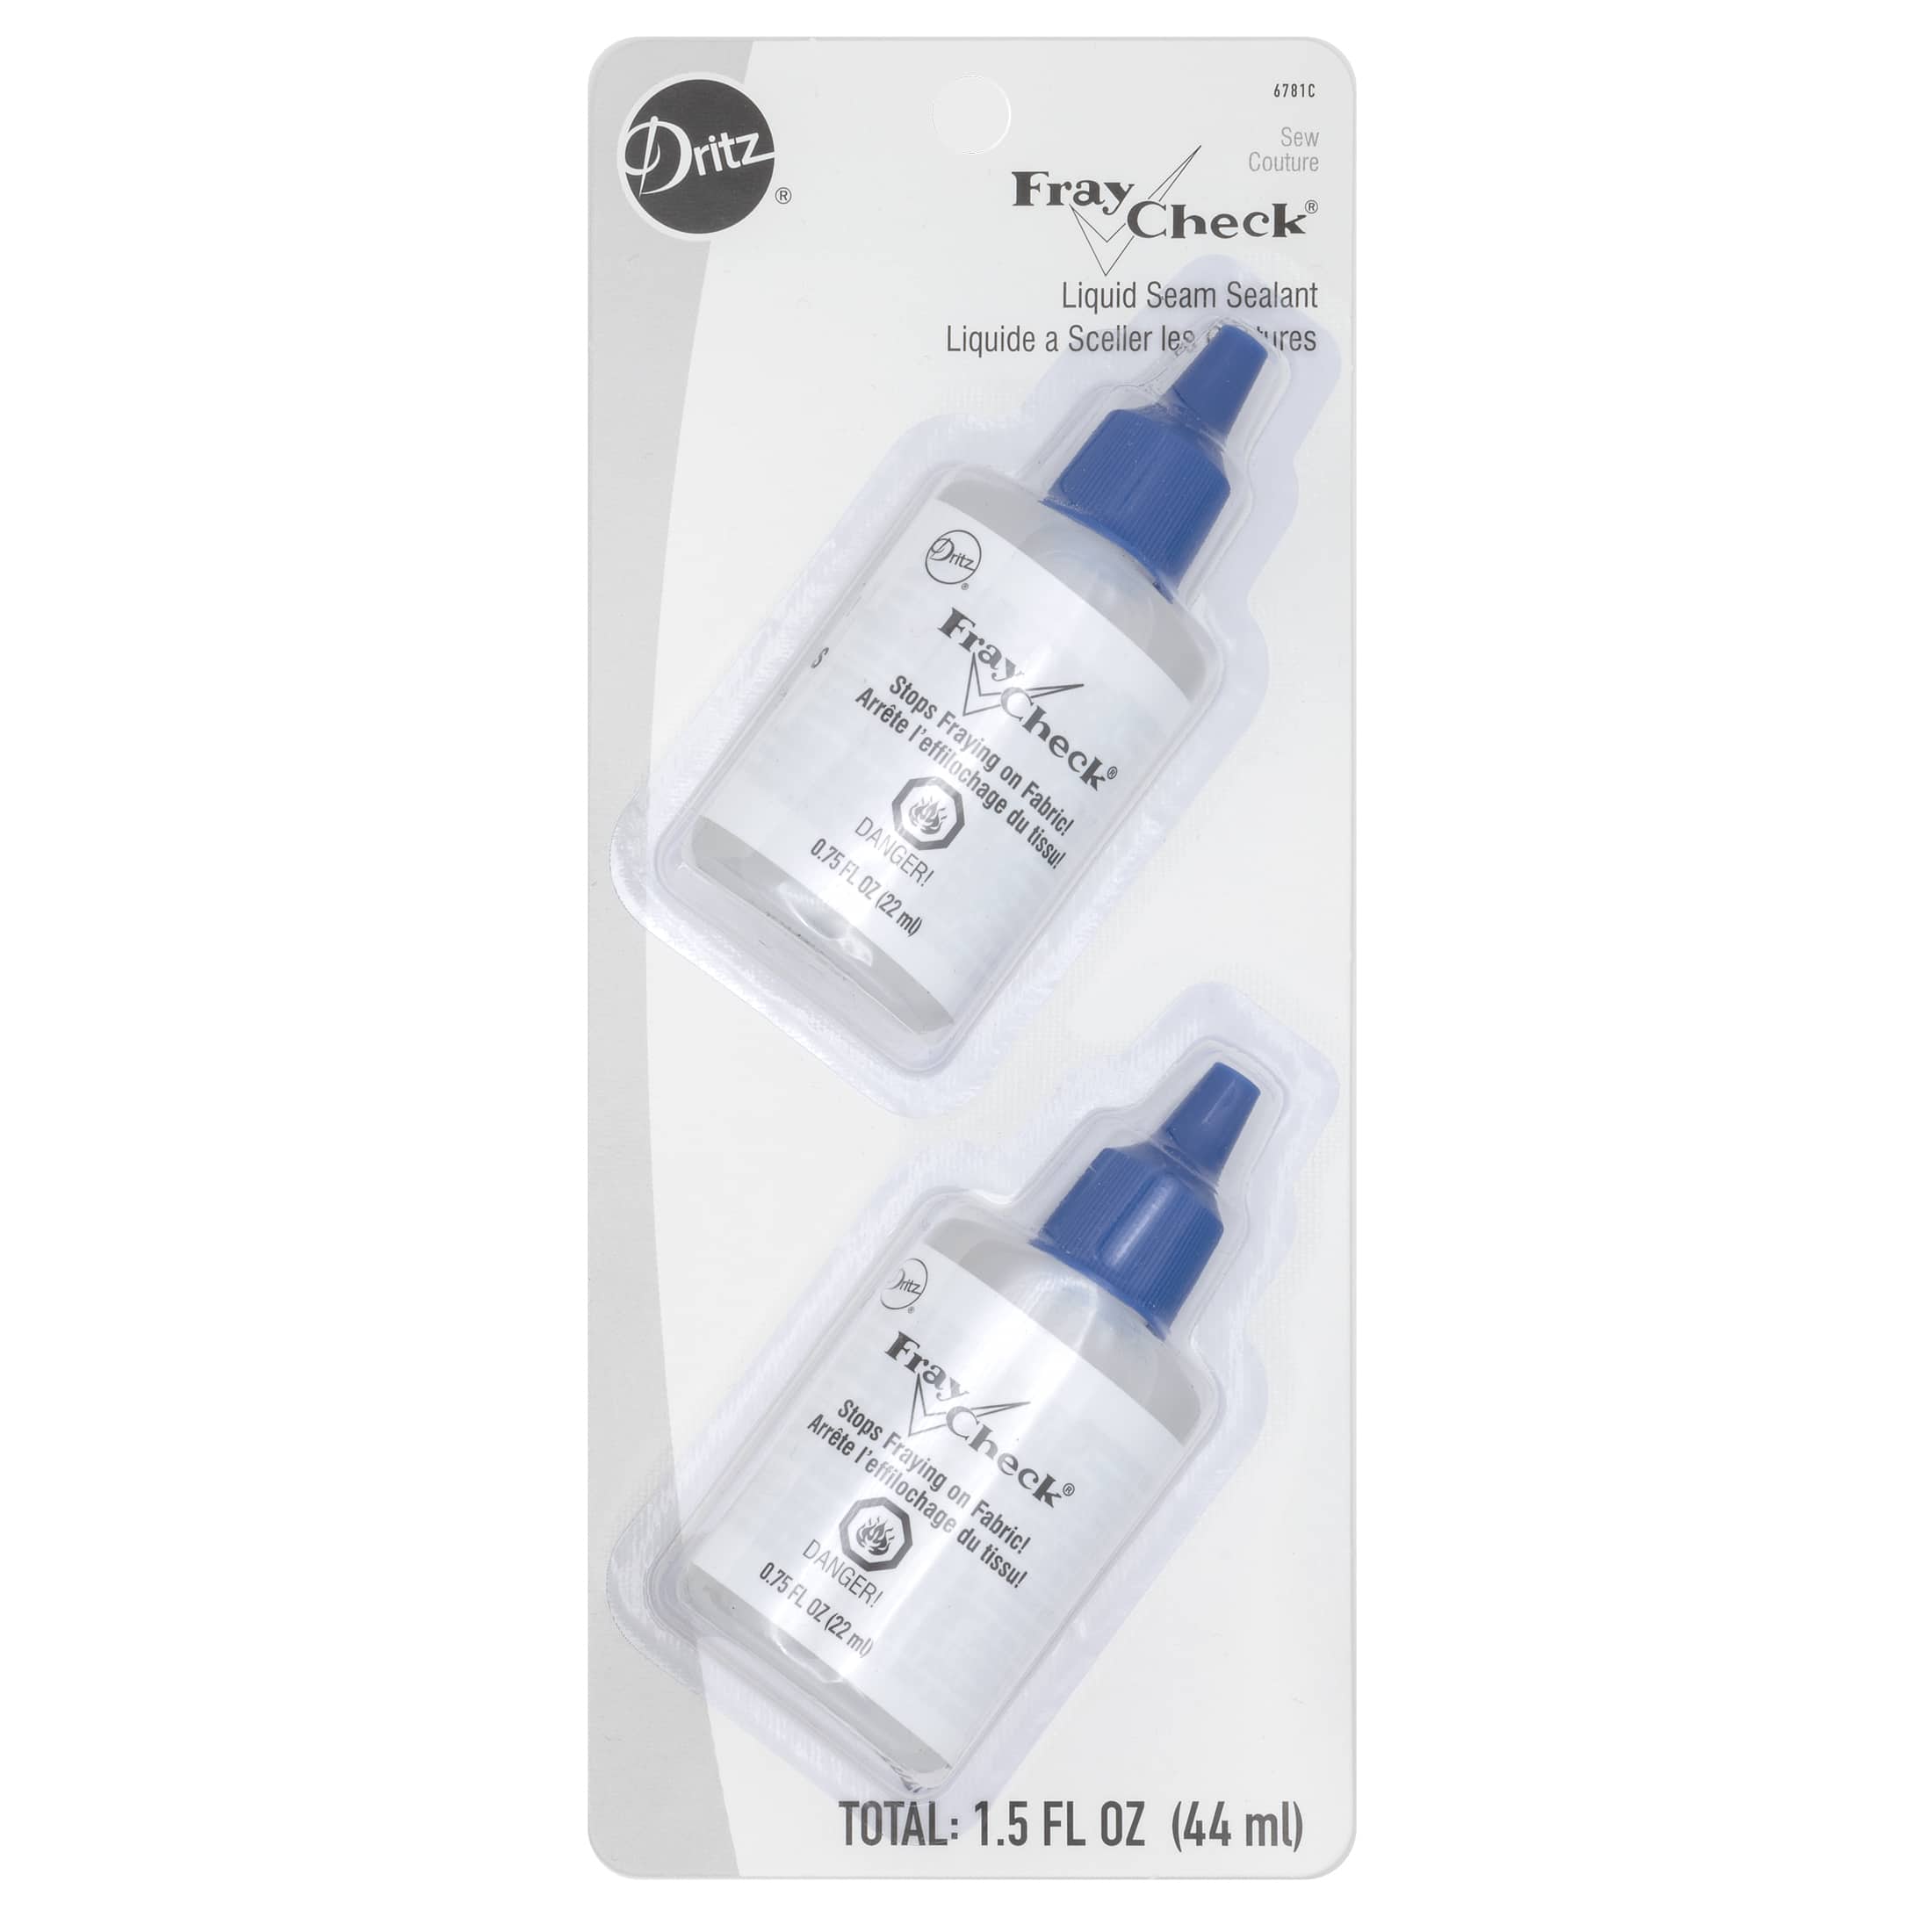 Dritz Fray Check Liquid Seam Sealant - 0.75 fl oz bottle